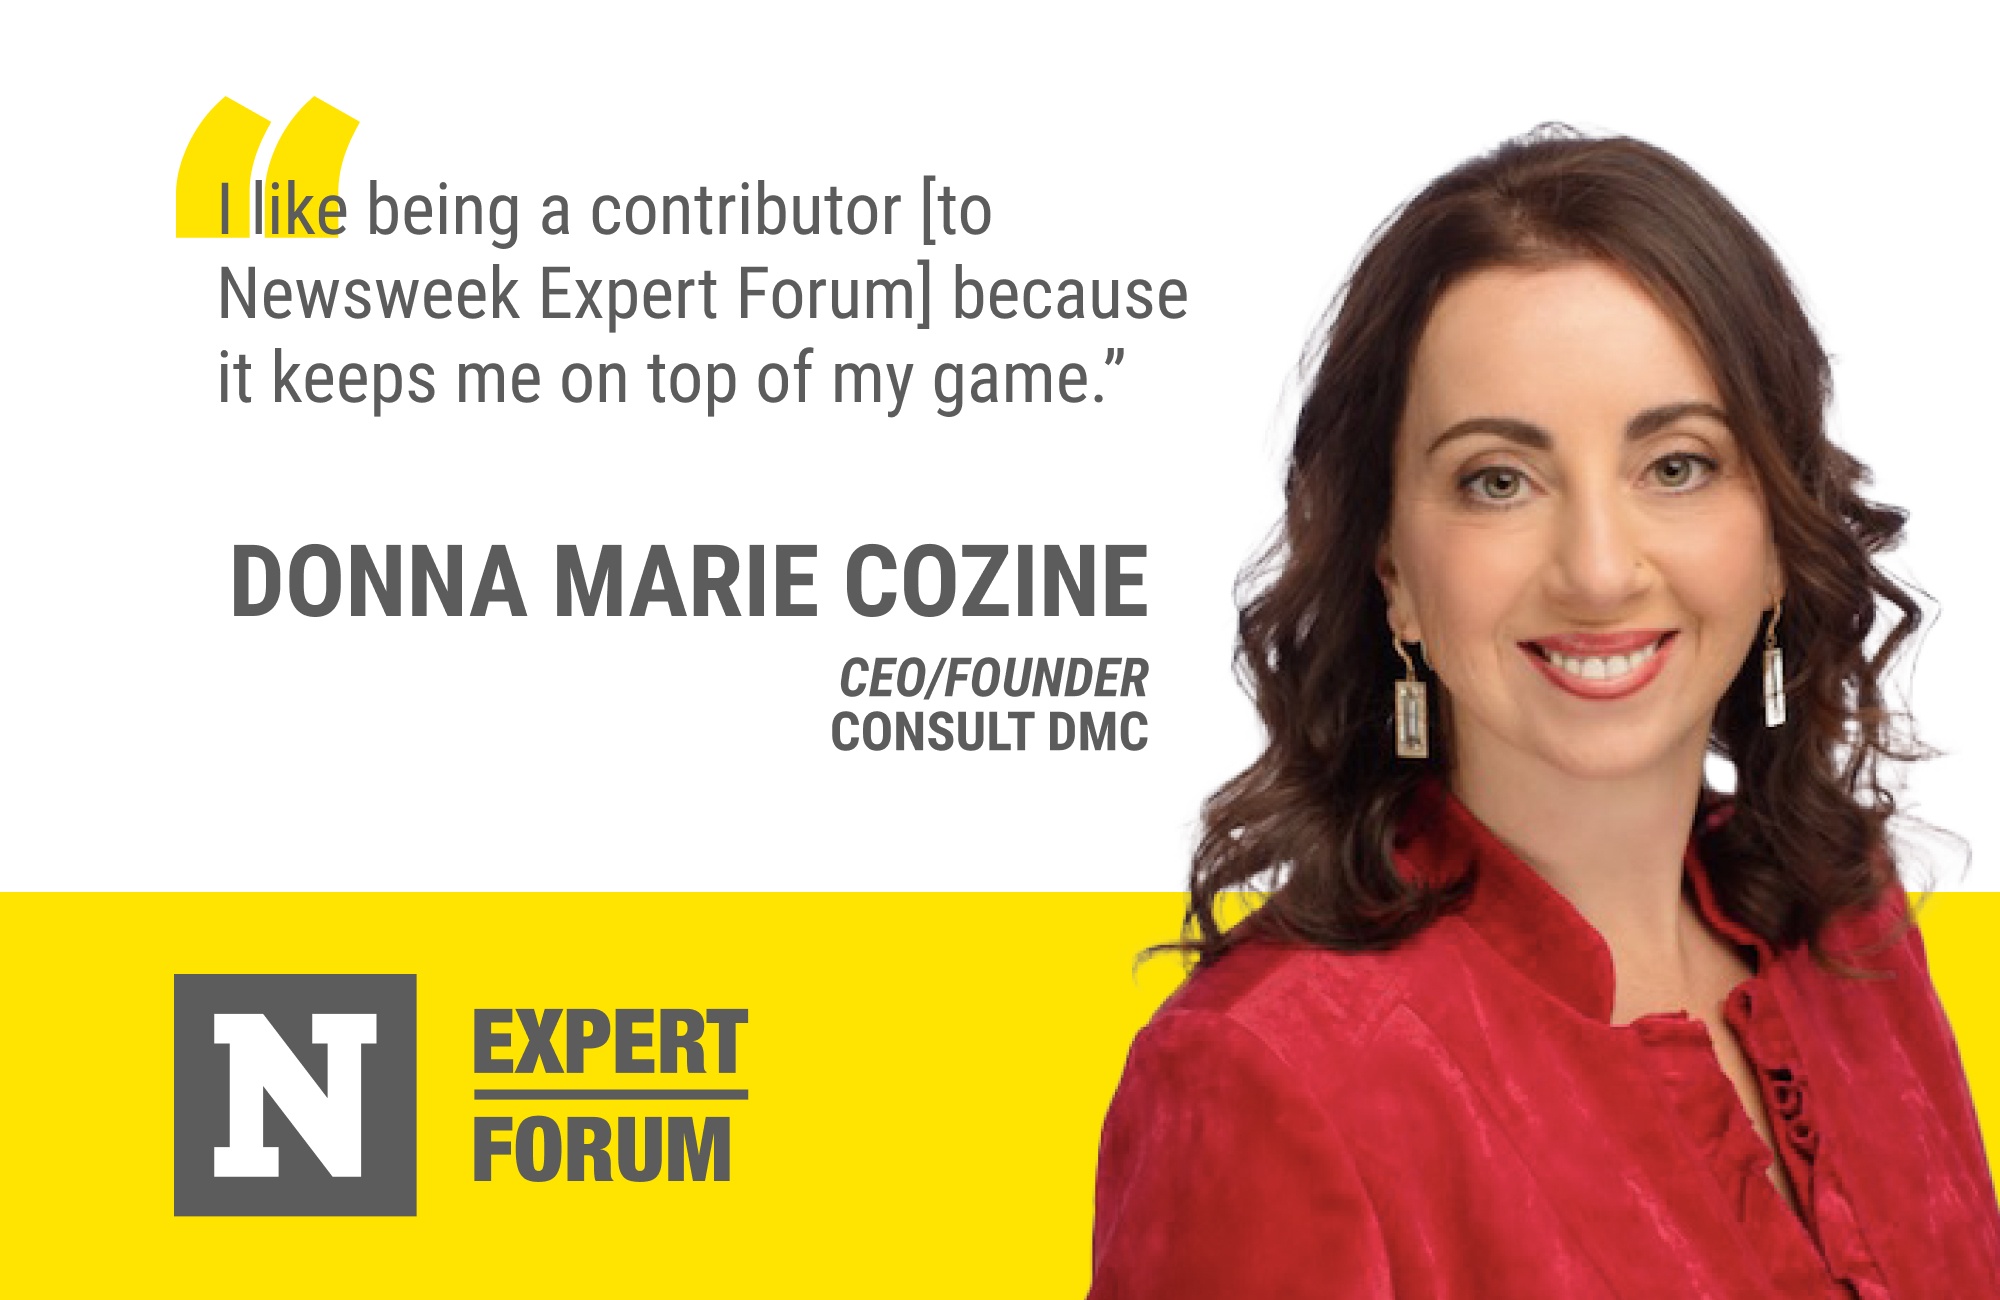 Newsweek Expert Forum member Donna Marie Cozine